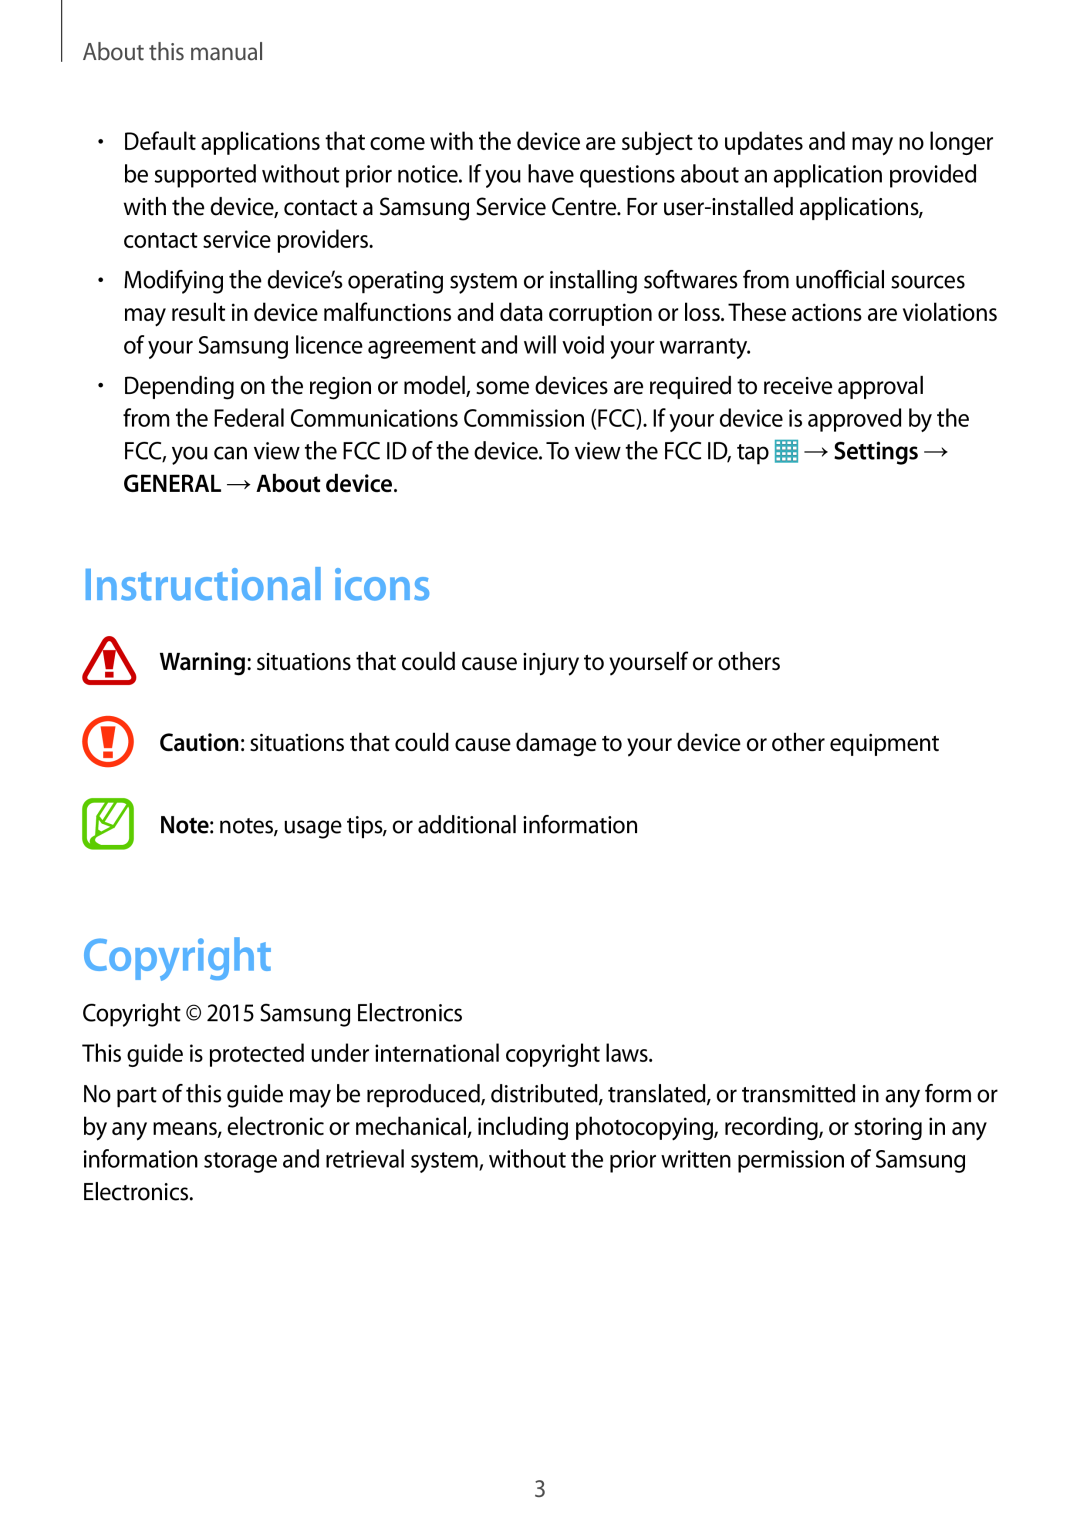 Samsung SM-P9000ZKAATO, SM-P9000ZWAATO, SM-P9000ZKAXEO, SM-P9000ZKASEB Instructional icons, Copyright, About this manual 